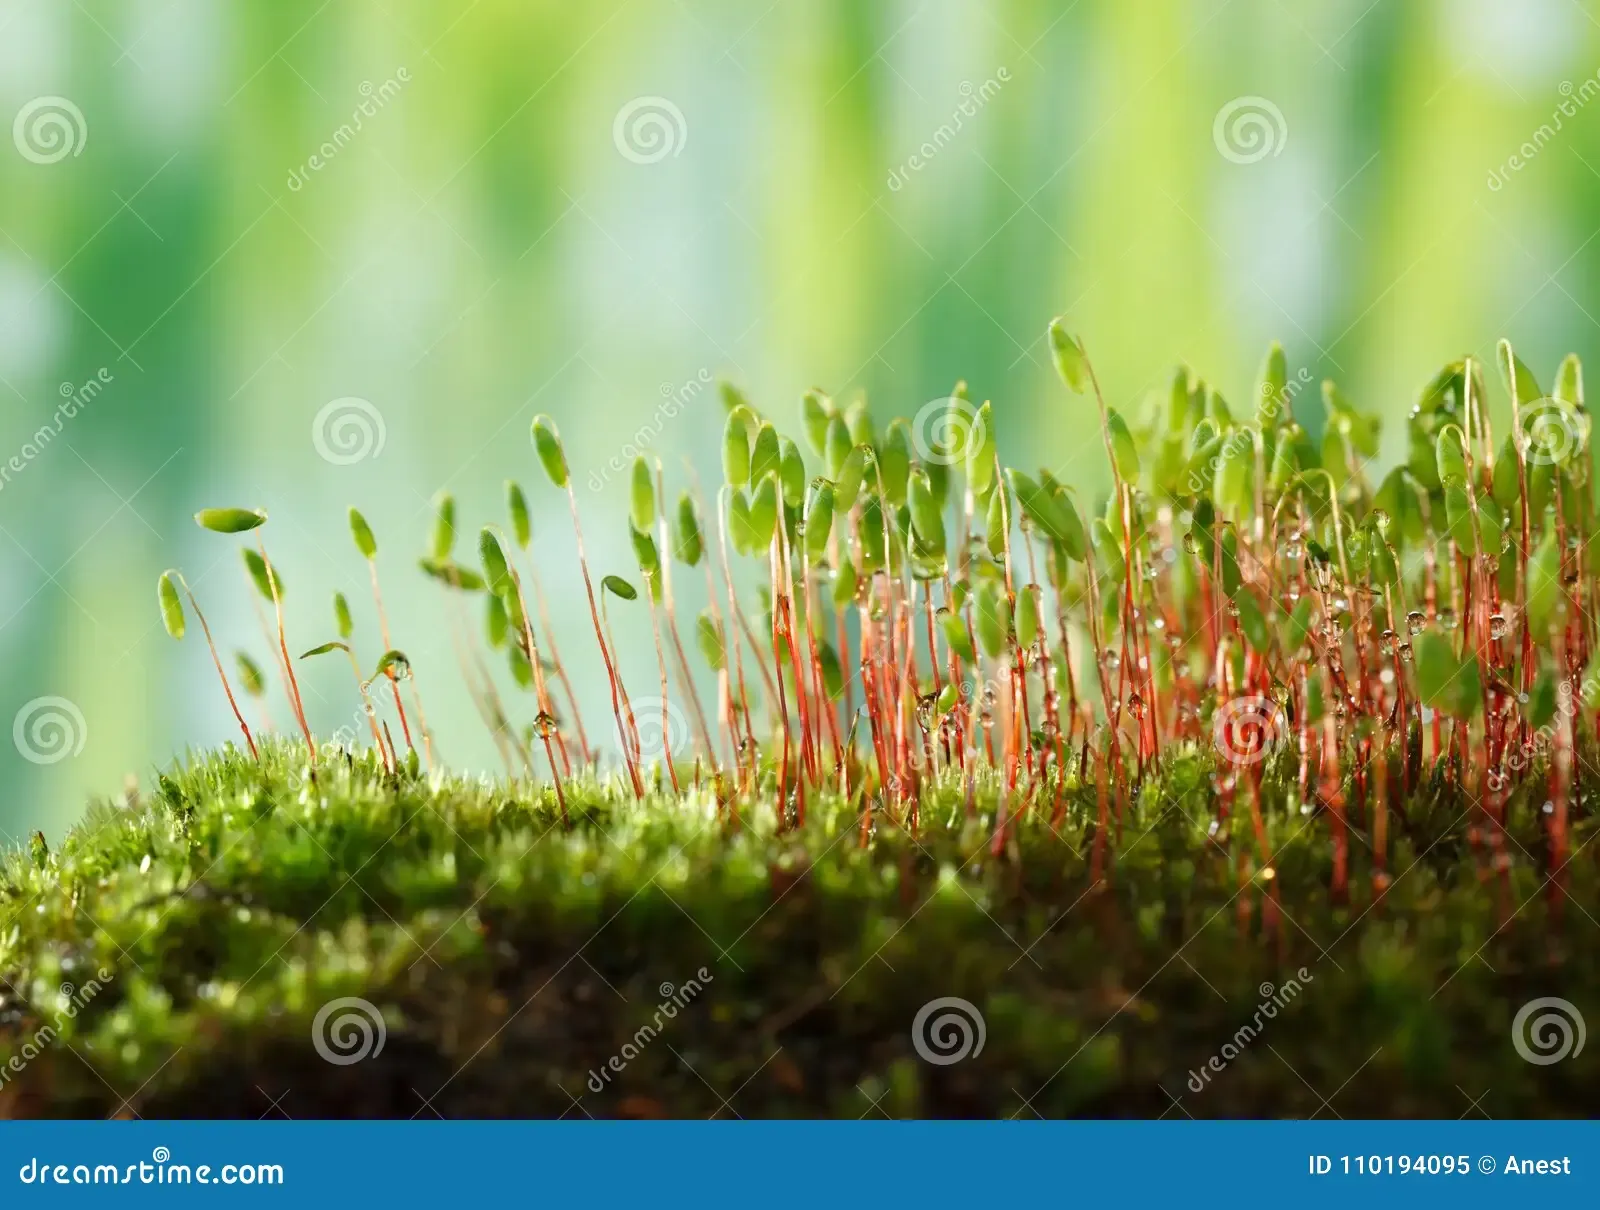 bryum-moss-macro-pohlia-nutans-green-spore-capsules-red-stalks-110194095.jpg